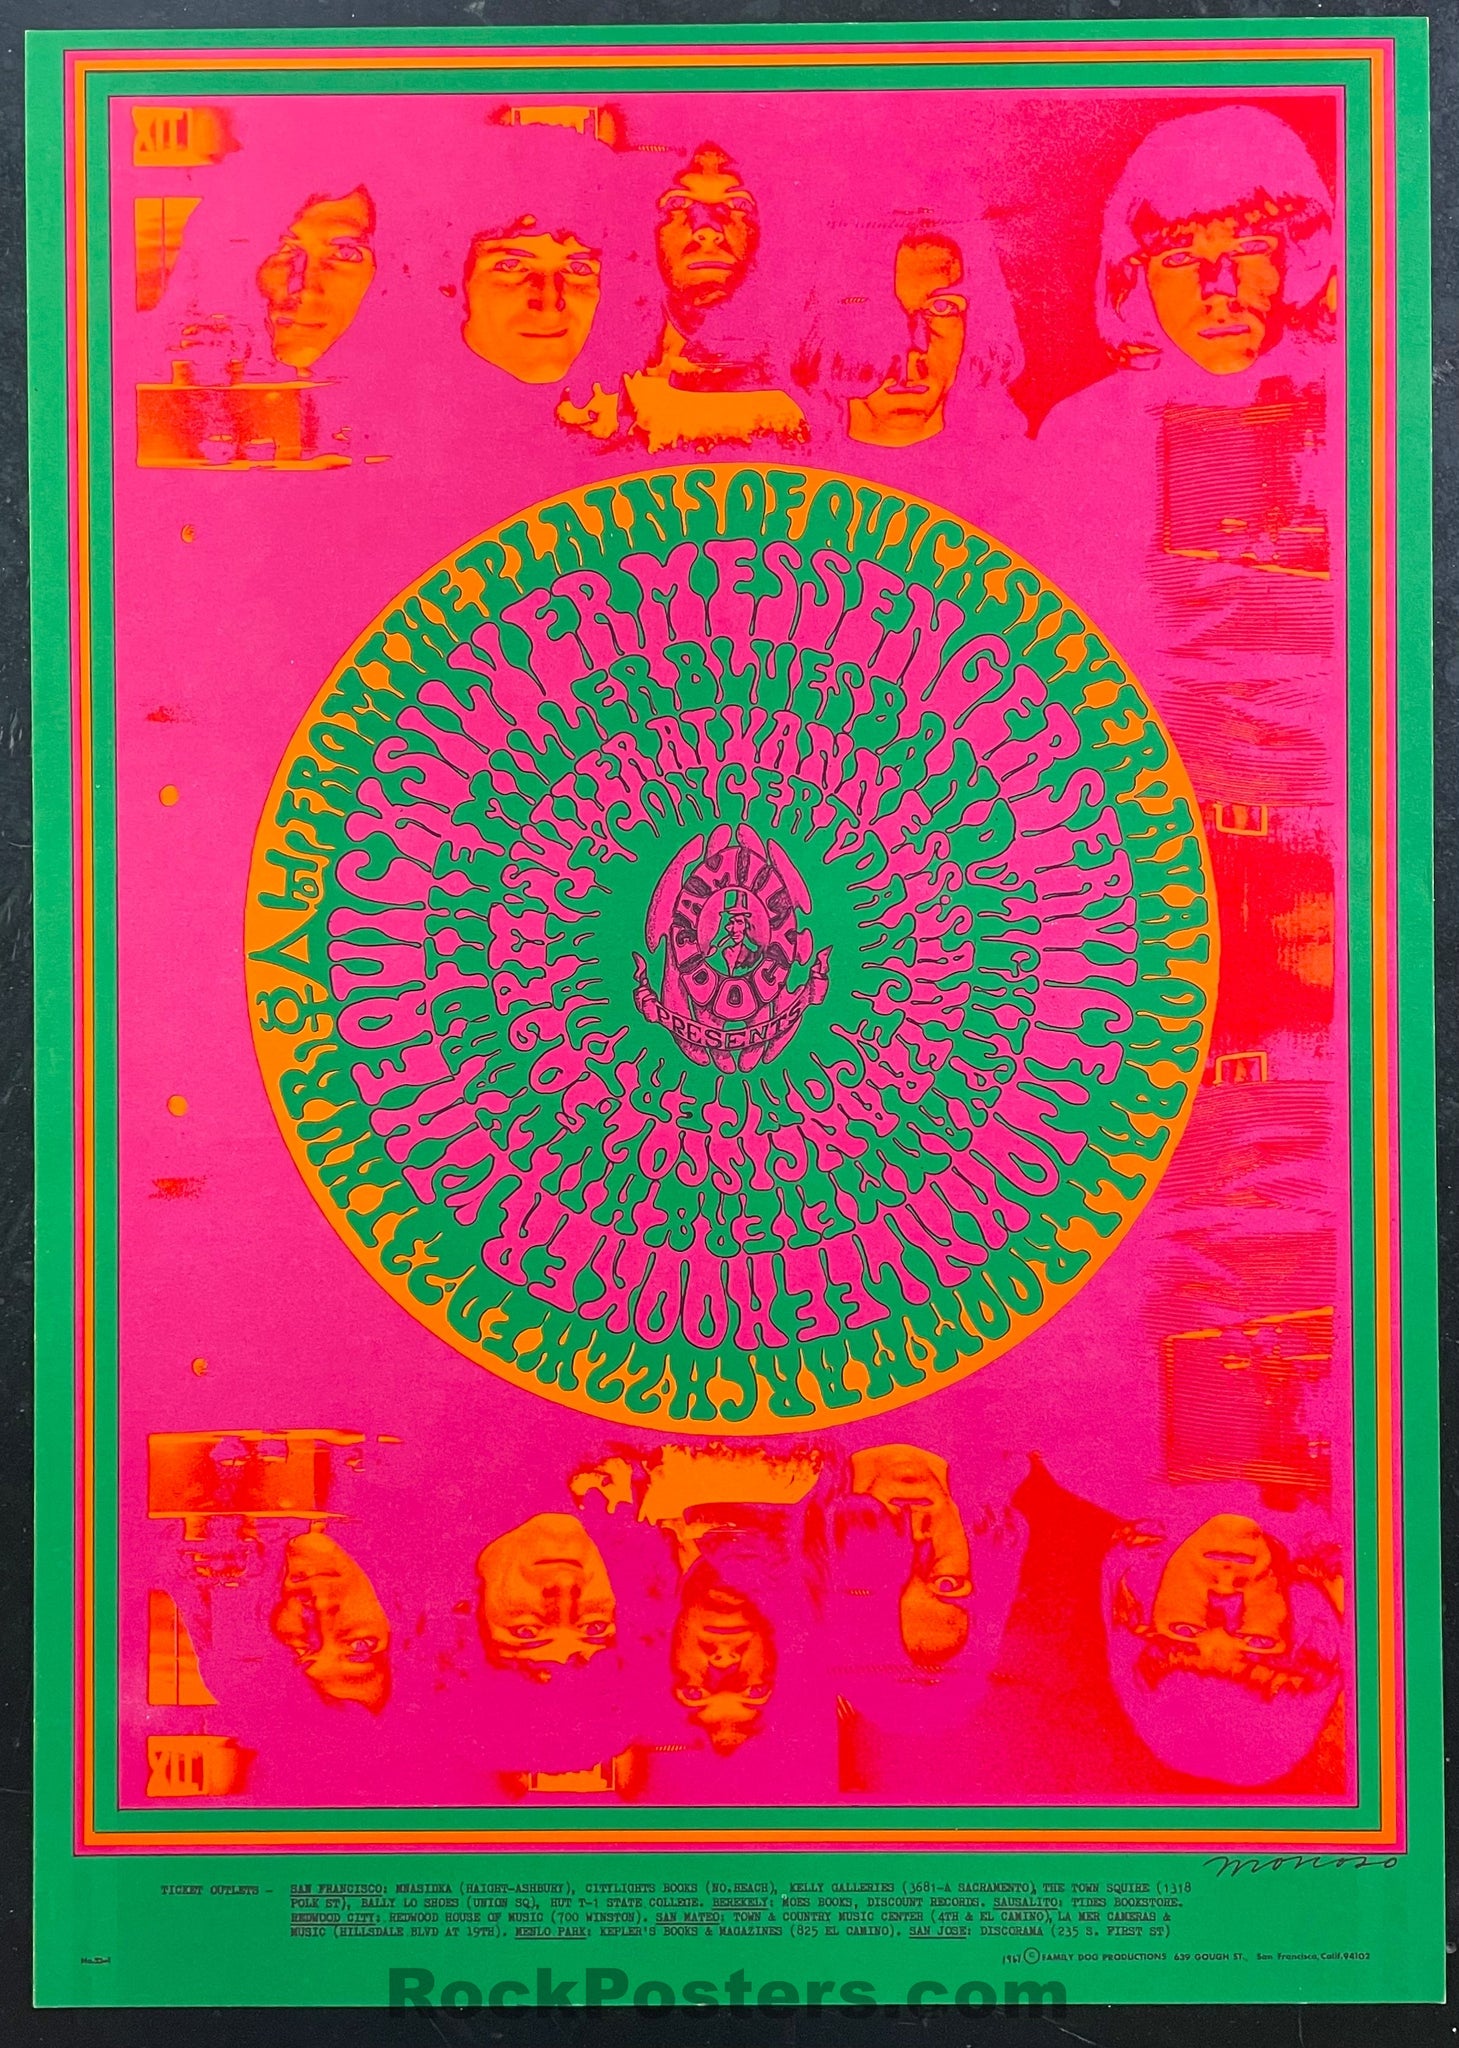 AUCTION - FD-53 - Quicksilver John Lee Hooker - 1967 Poster - Avalon Ballroom - Near Mint